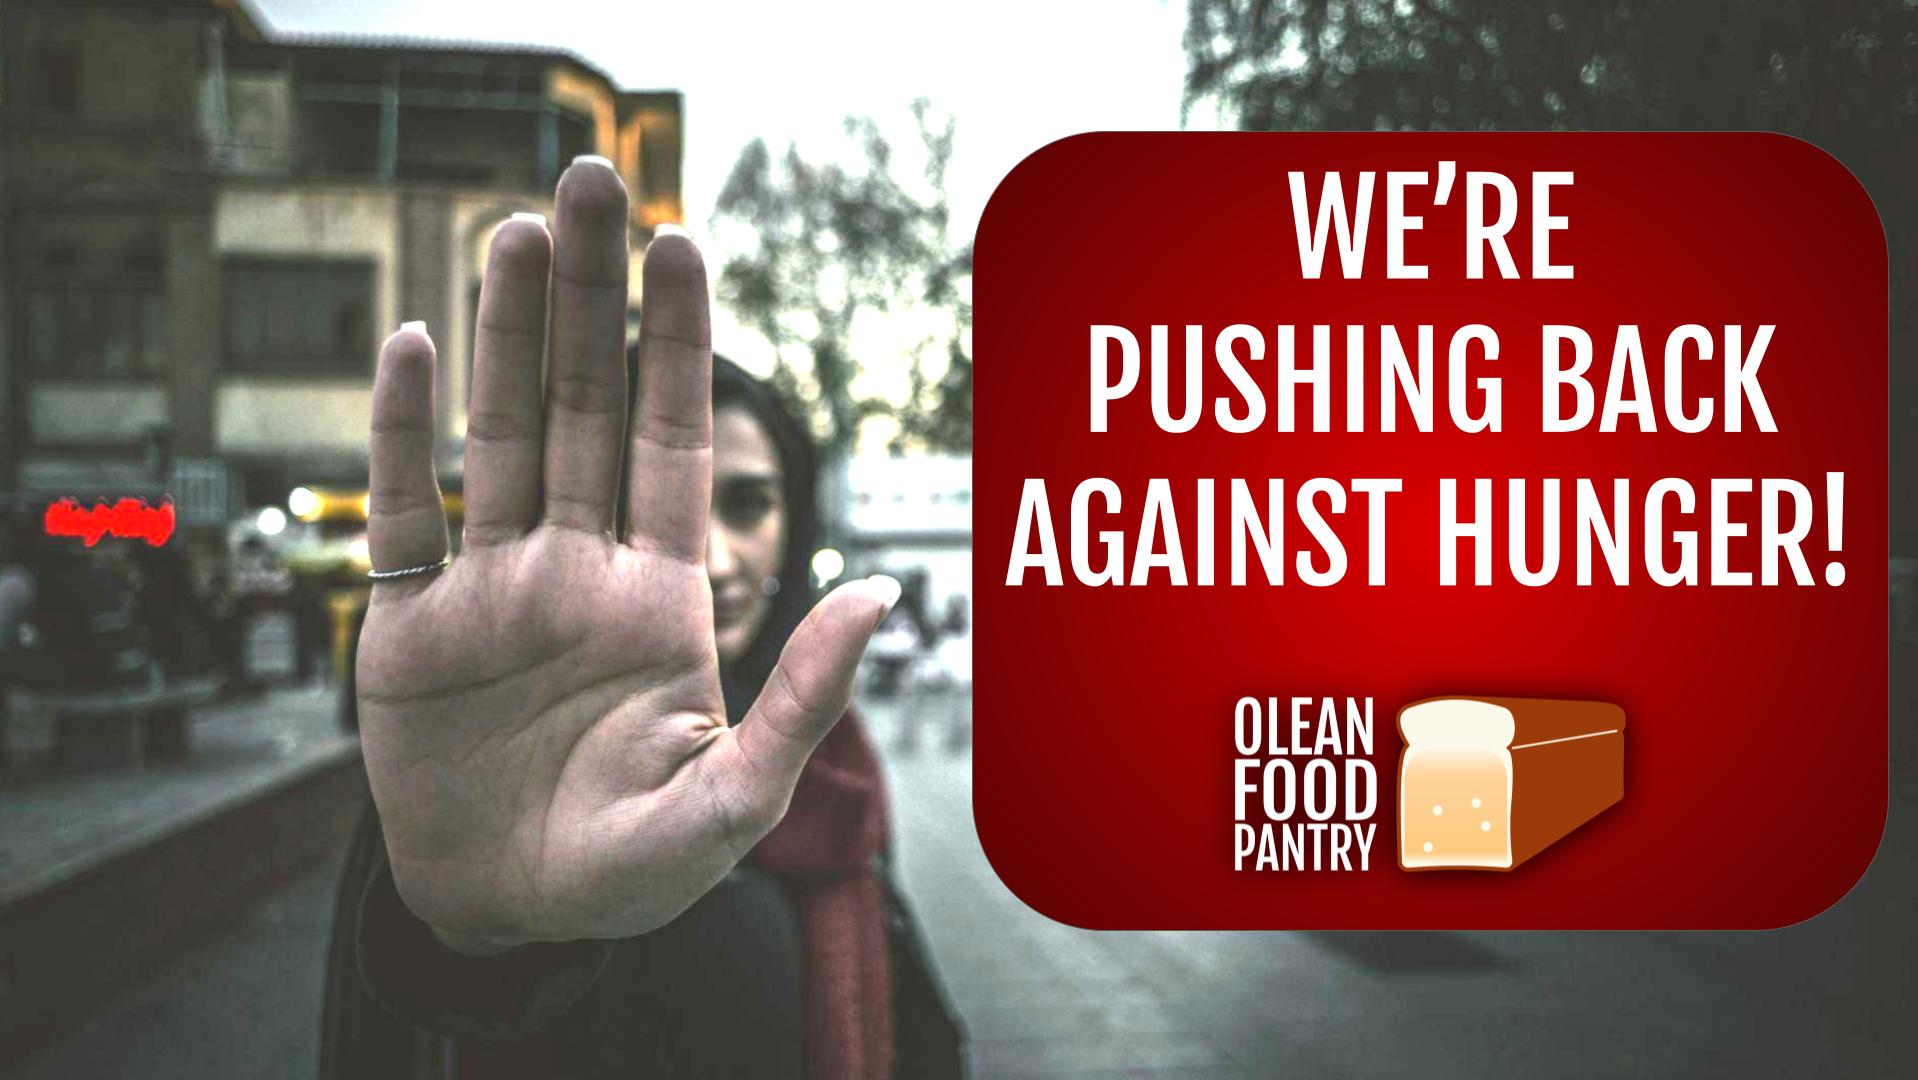 Olean Food Pantry fights food insecurity